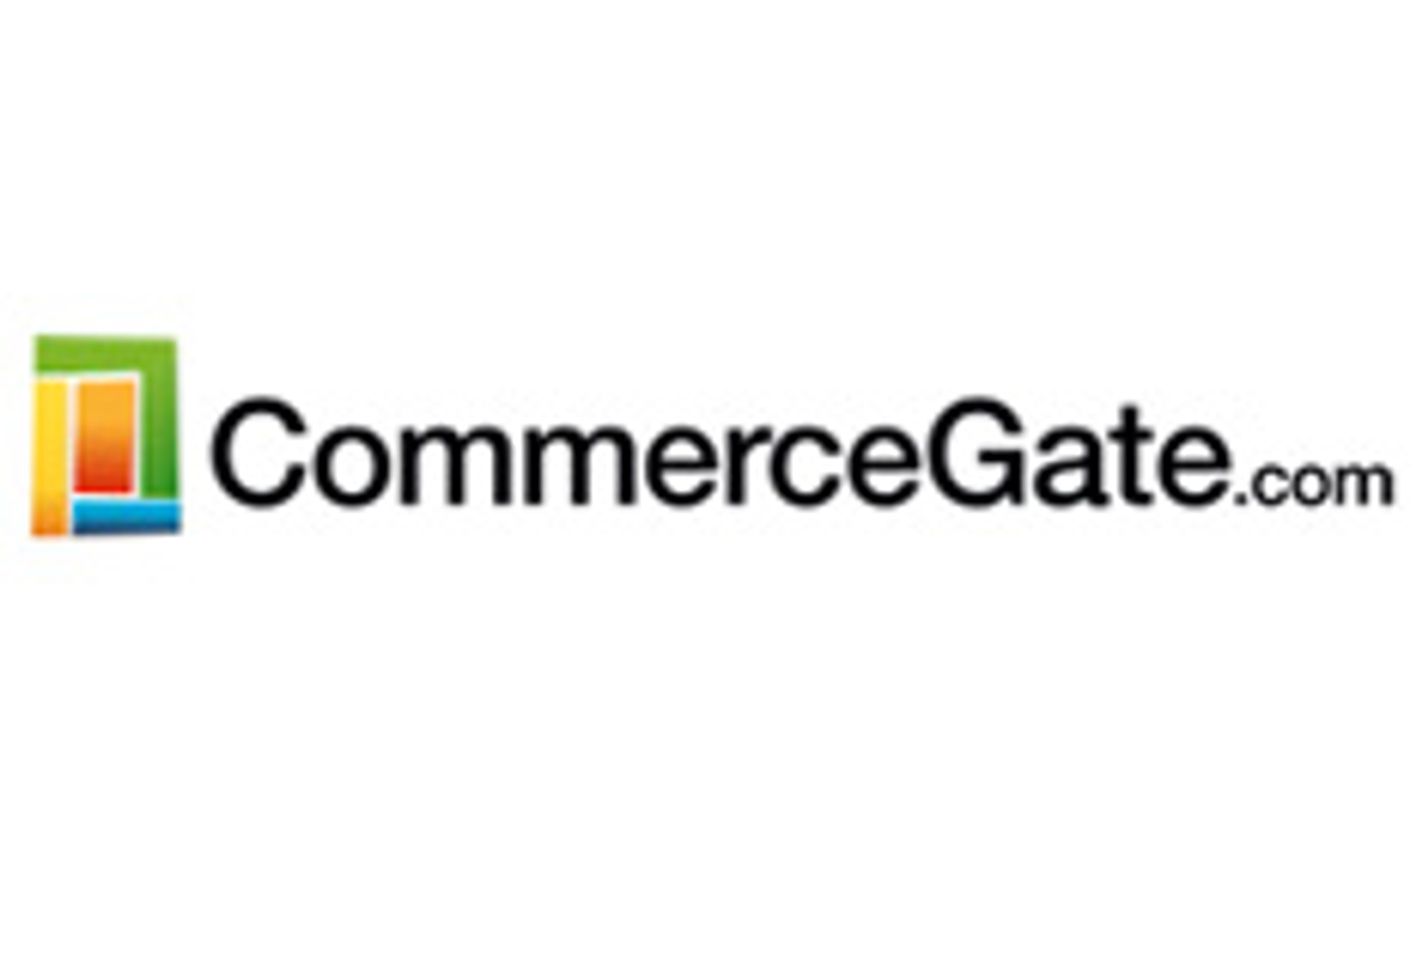 CommerceGate Sponsors Eurowebtainment Majorca